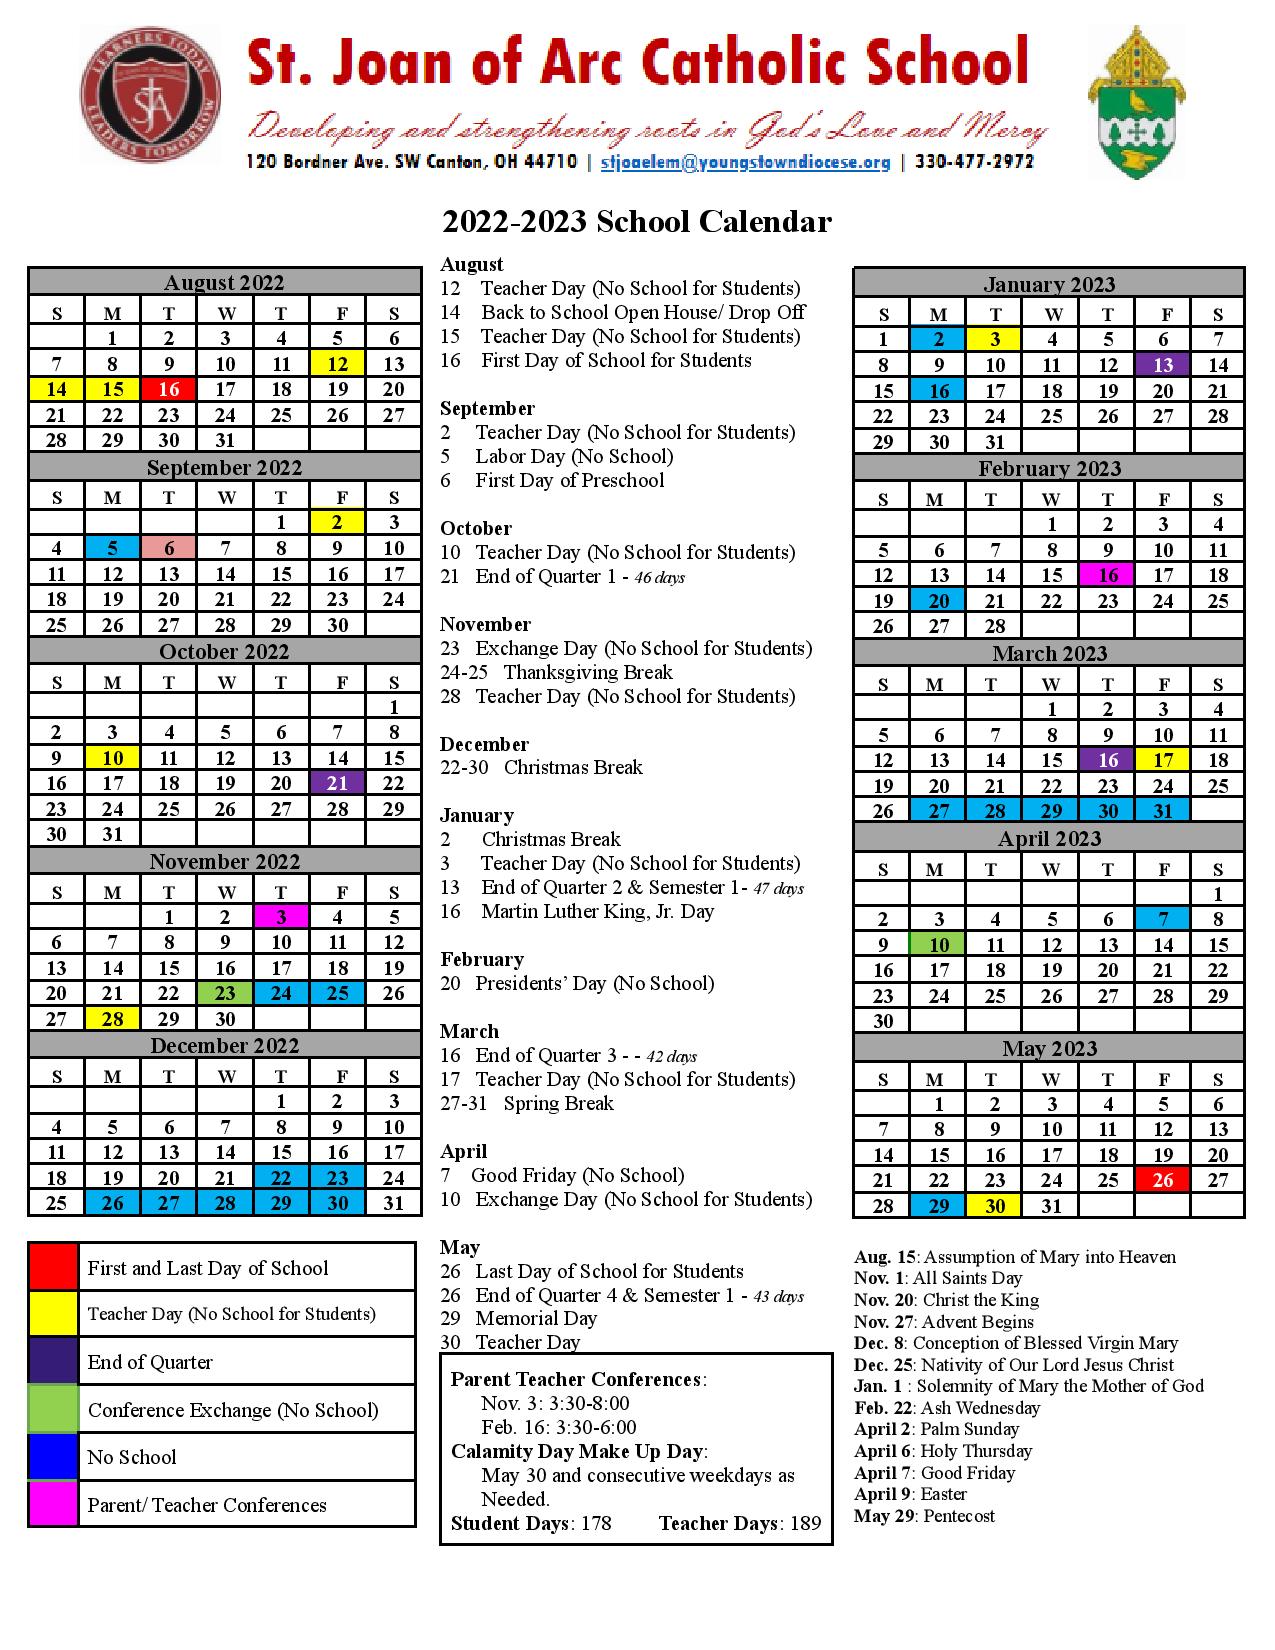 Academic Calendar 202223